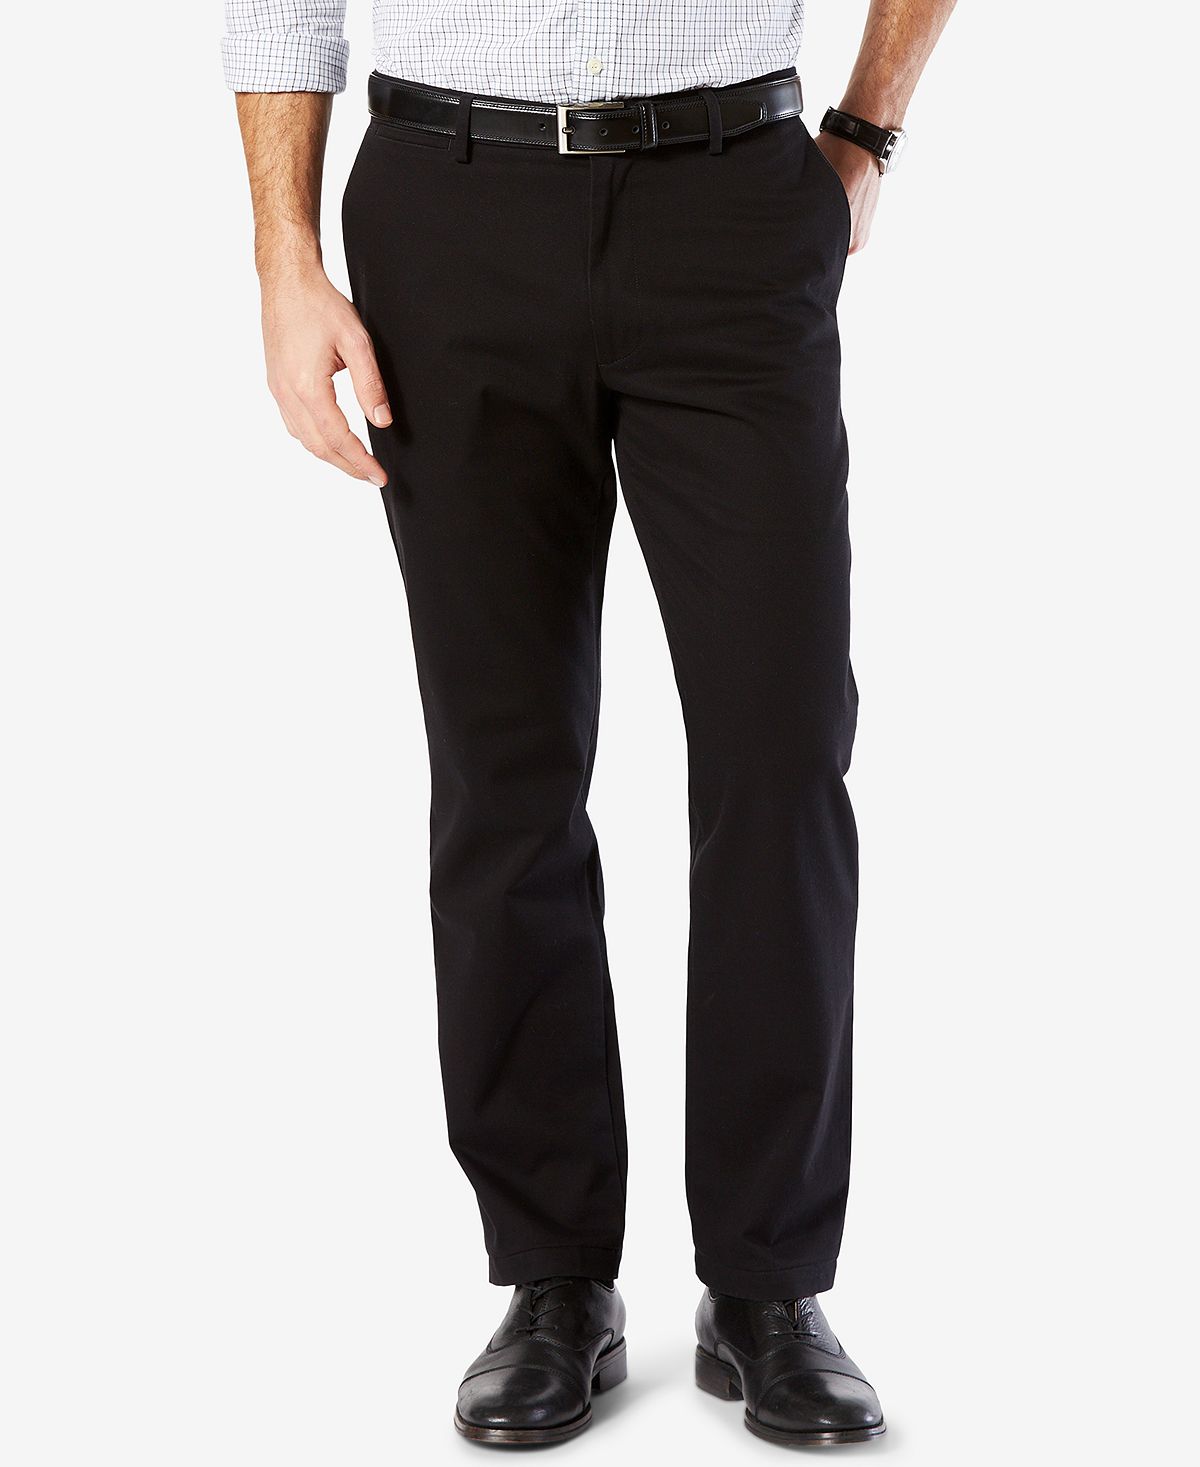 Dockers ' Signature Lux Cotton Straight Fit Stretch Khaki Pants Black